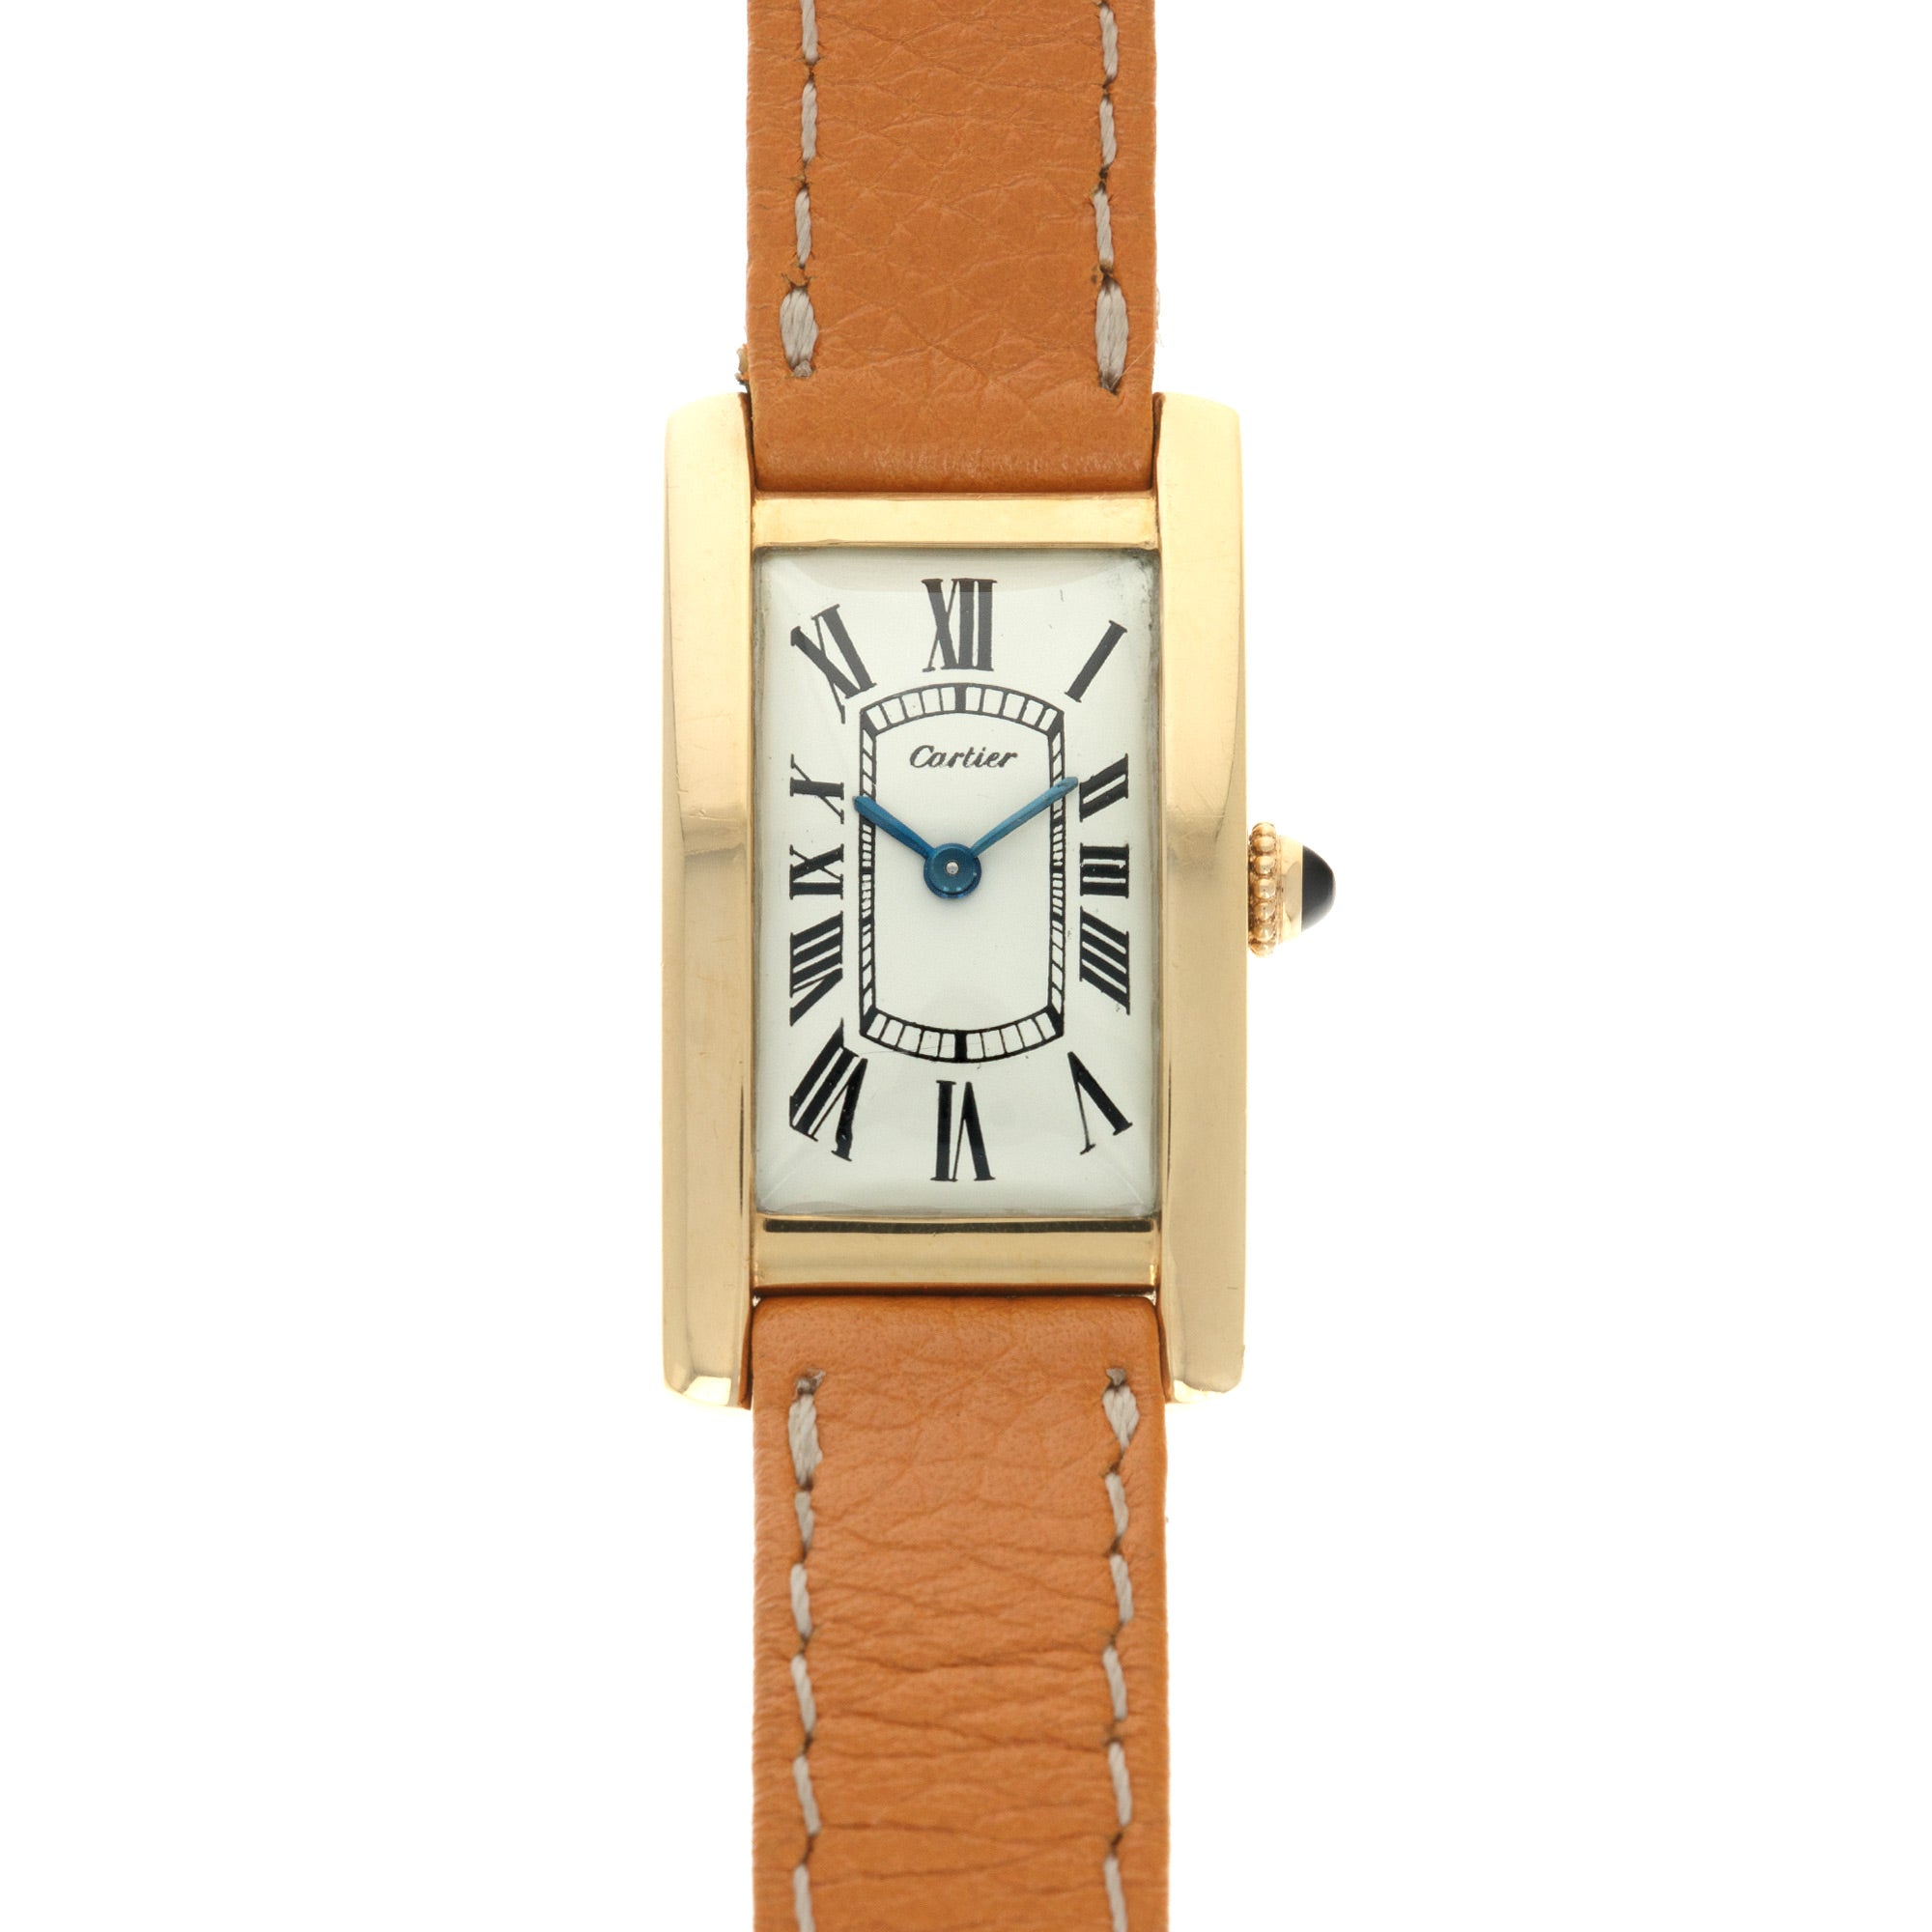 Cartier - Cartier Yellow Gold Tank Cintree London Watch - The Keystone Watches